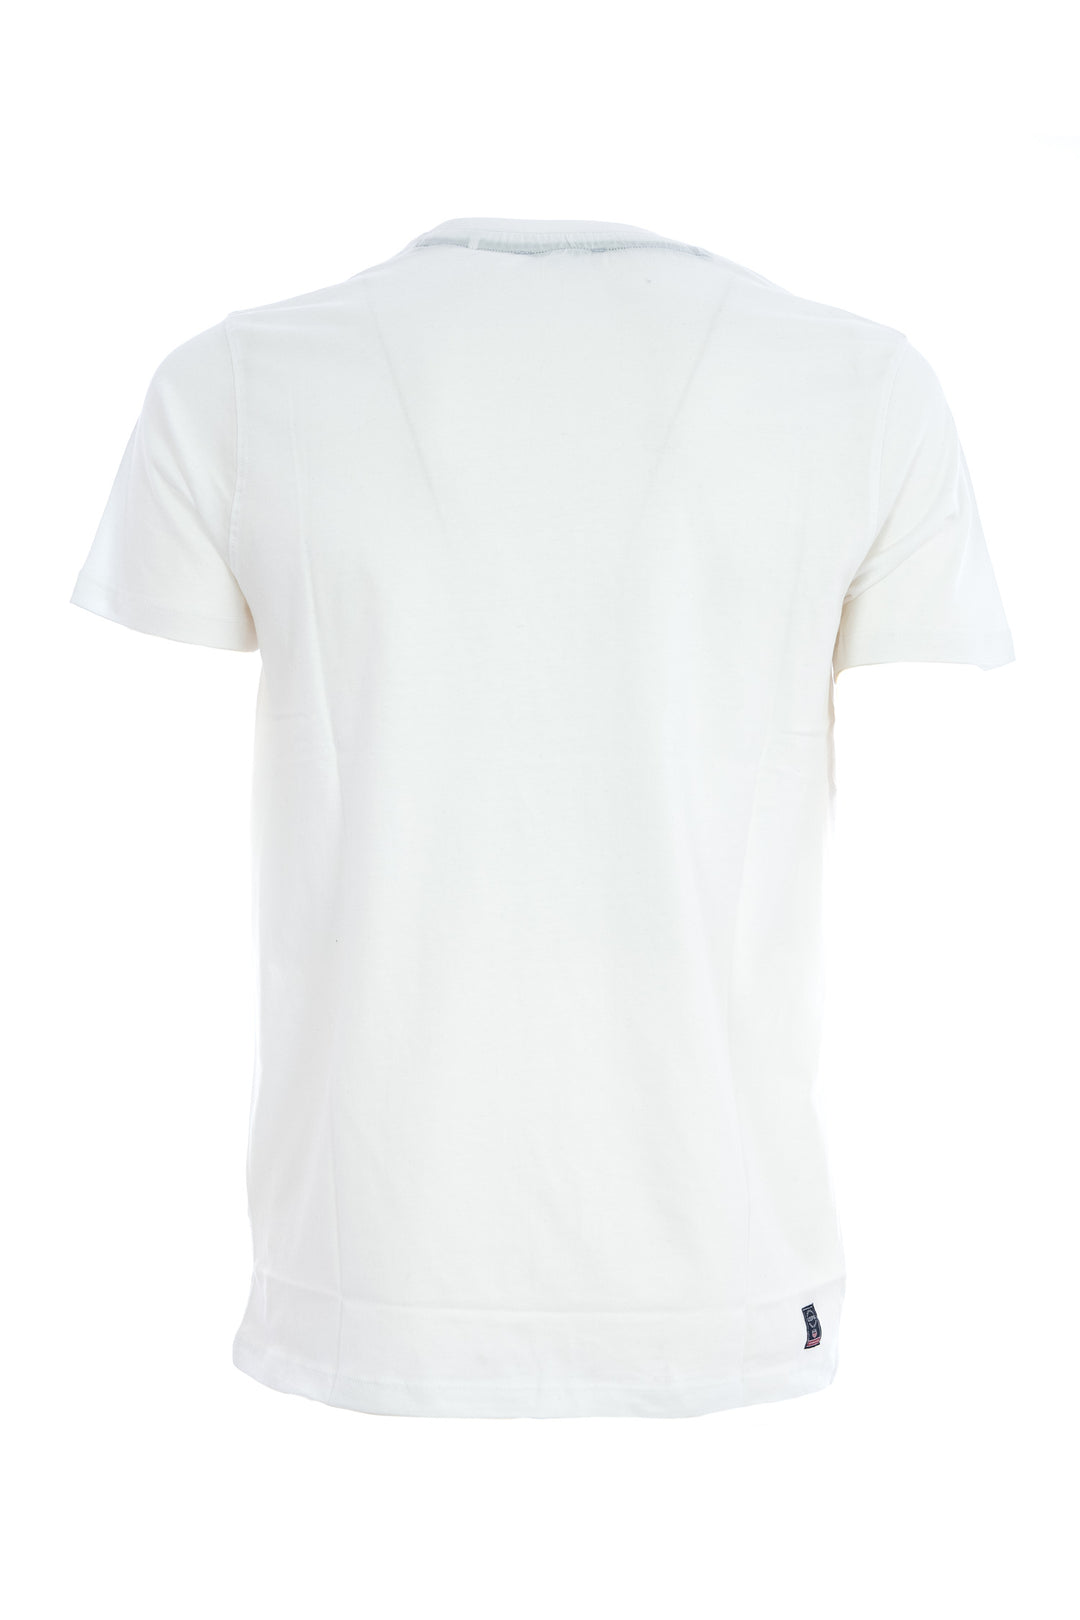 U.S. POLO ASSN. BEACHWEAR T-shirt in cotone con logo ricamato bianca - Mancinelli 1954